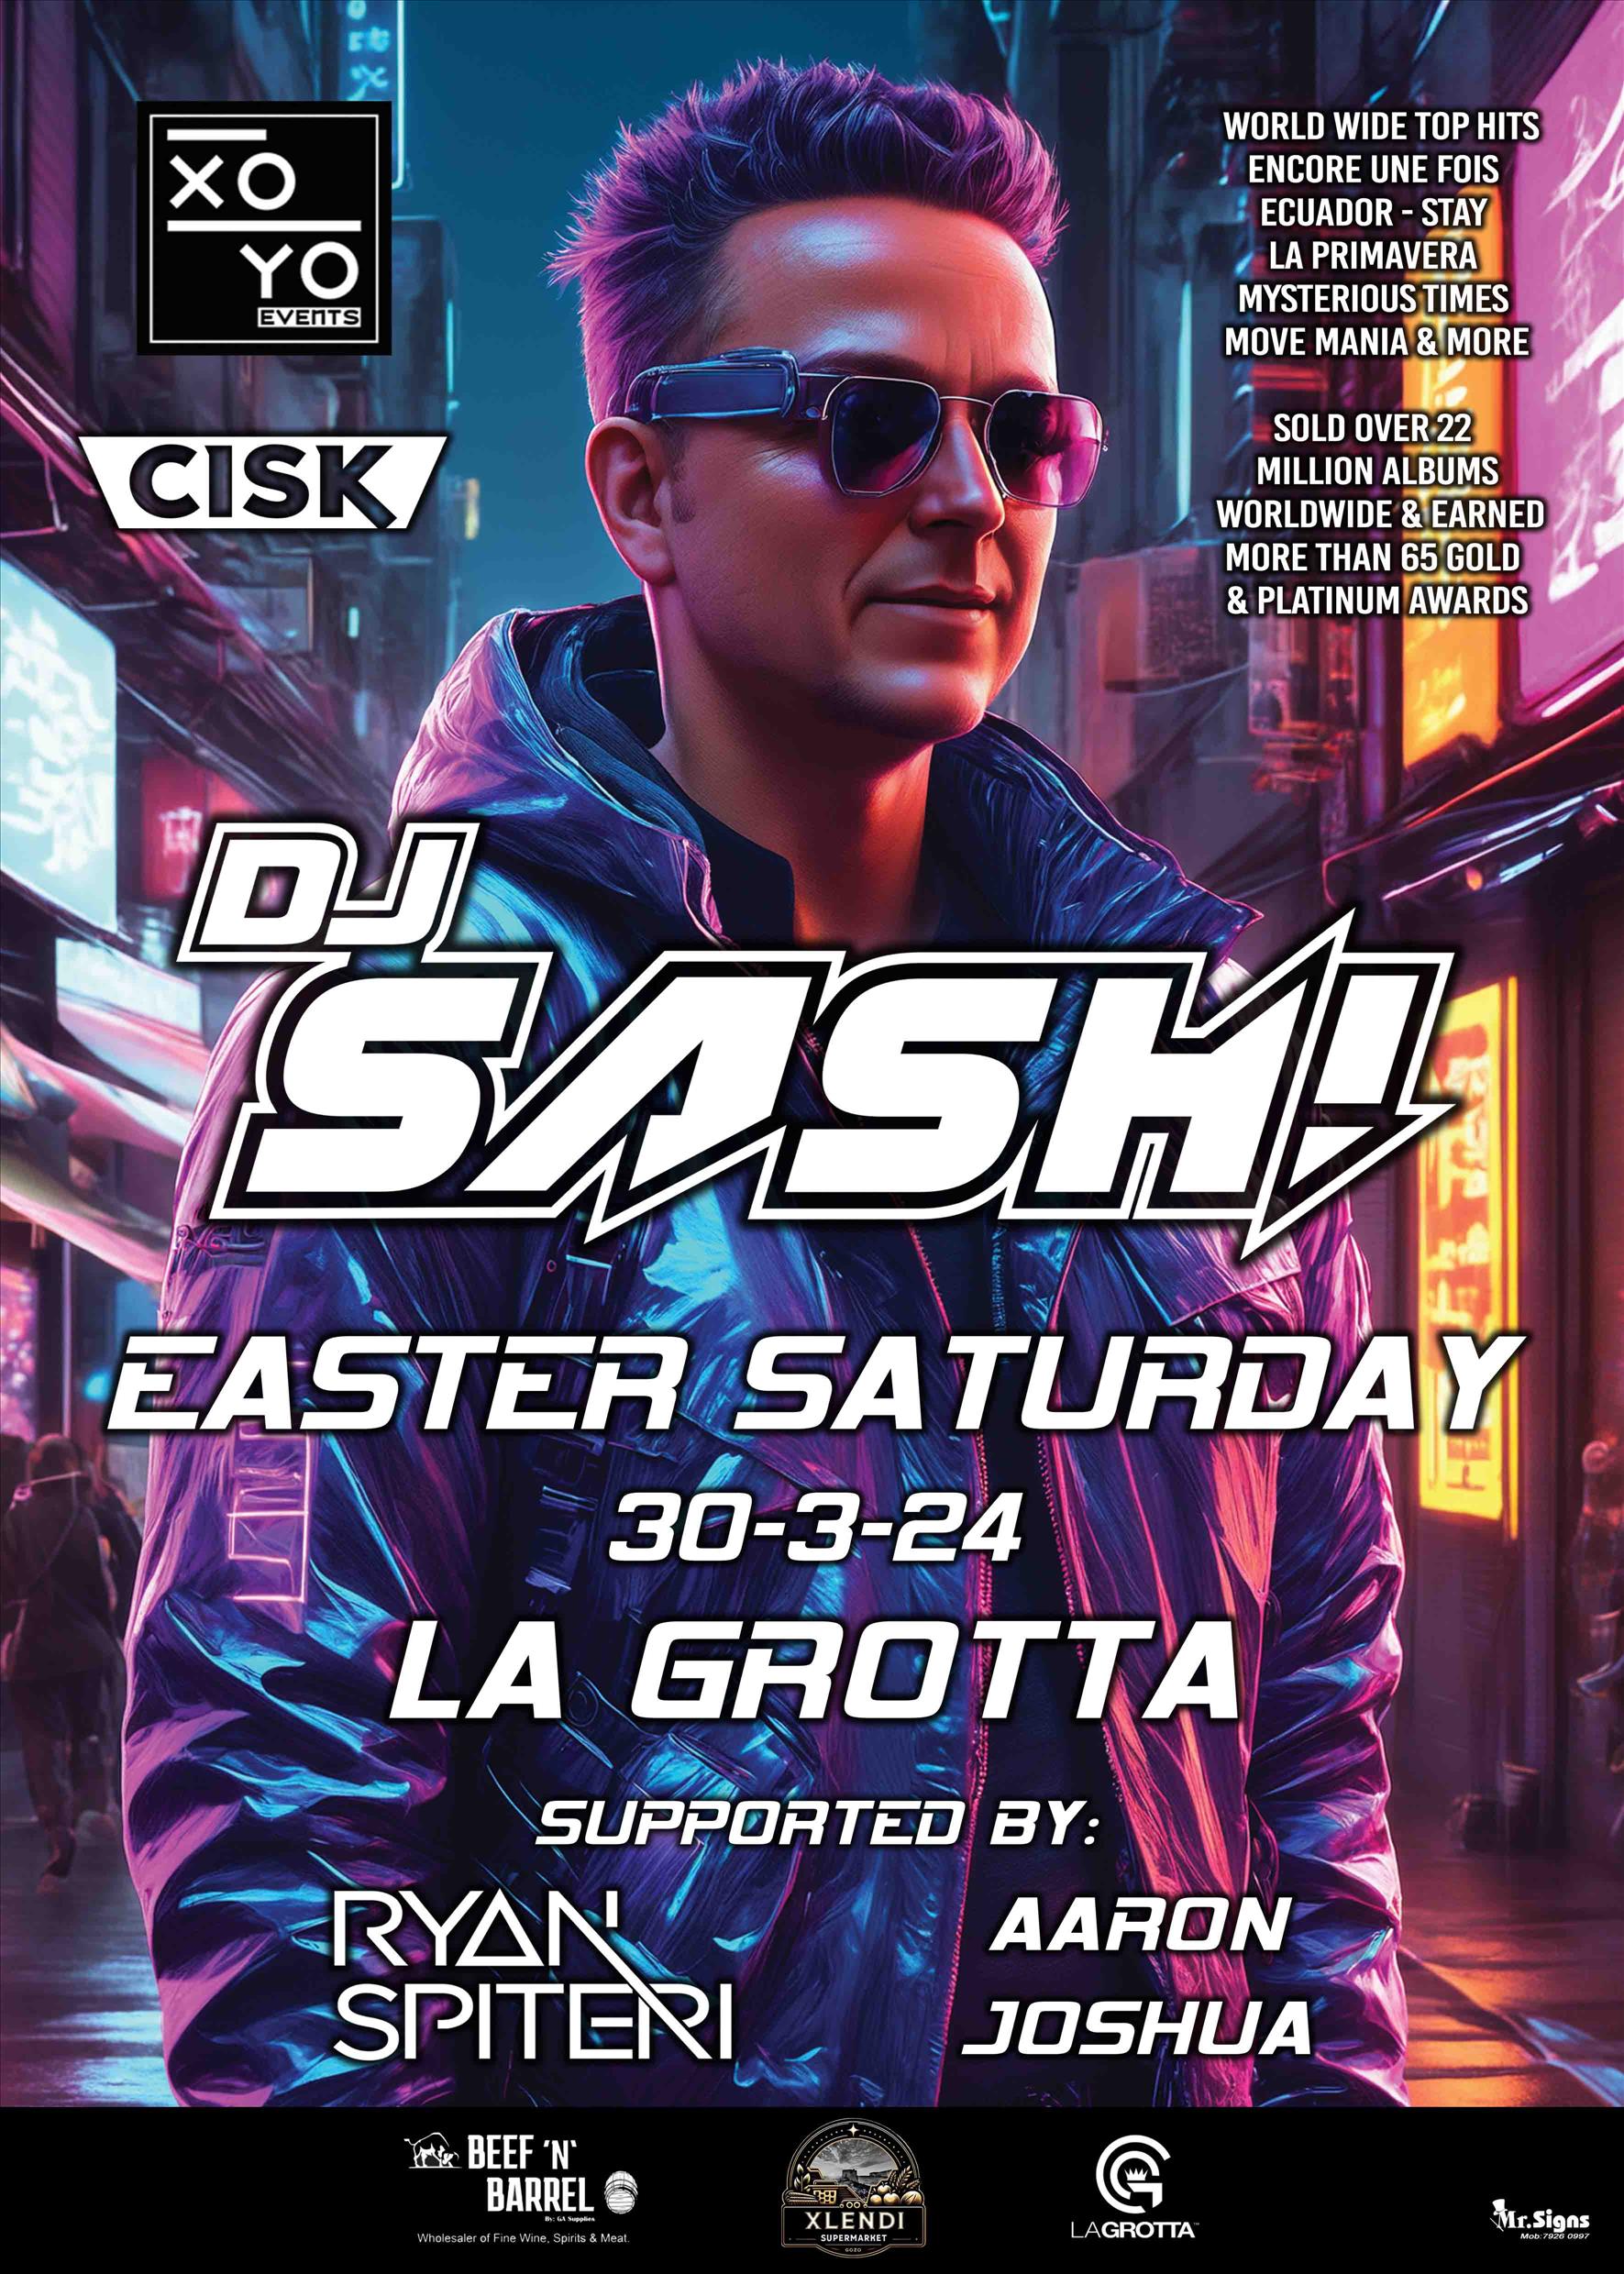 DJ SASH! / EASTER SATURDAY / LA GROTTA